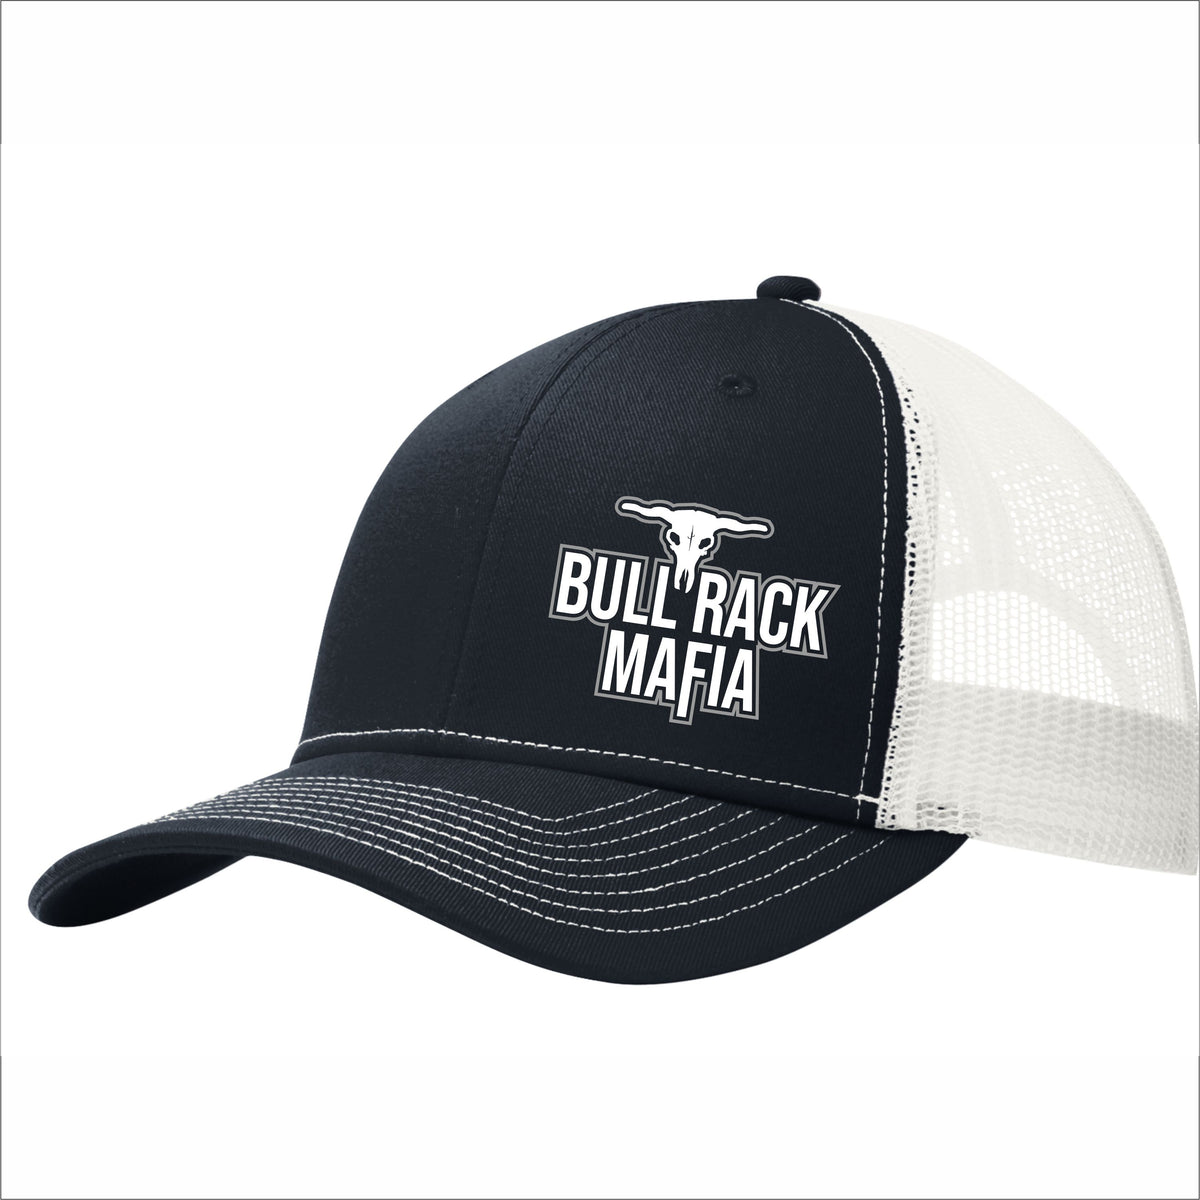 Bull Rack Mafia 6 Panel Mesh Back Hat Free Shipping